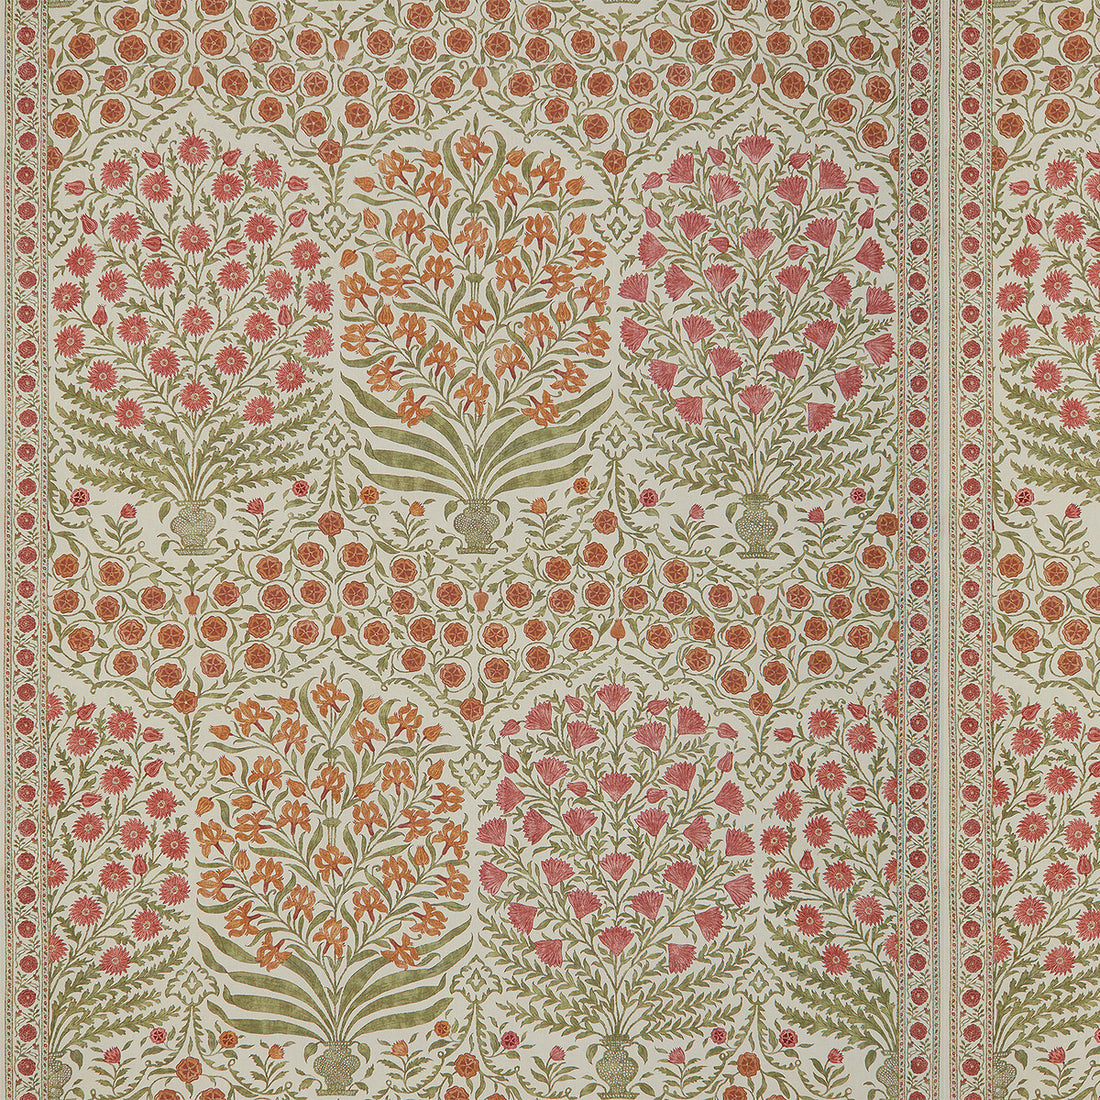 Sameera fabric in spice/berry color - pattern 2017108.924.0 - by Lee Jofa in the Oscar De La Renta III collection